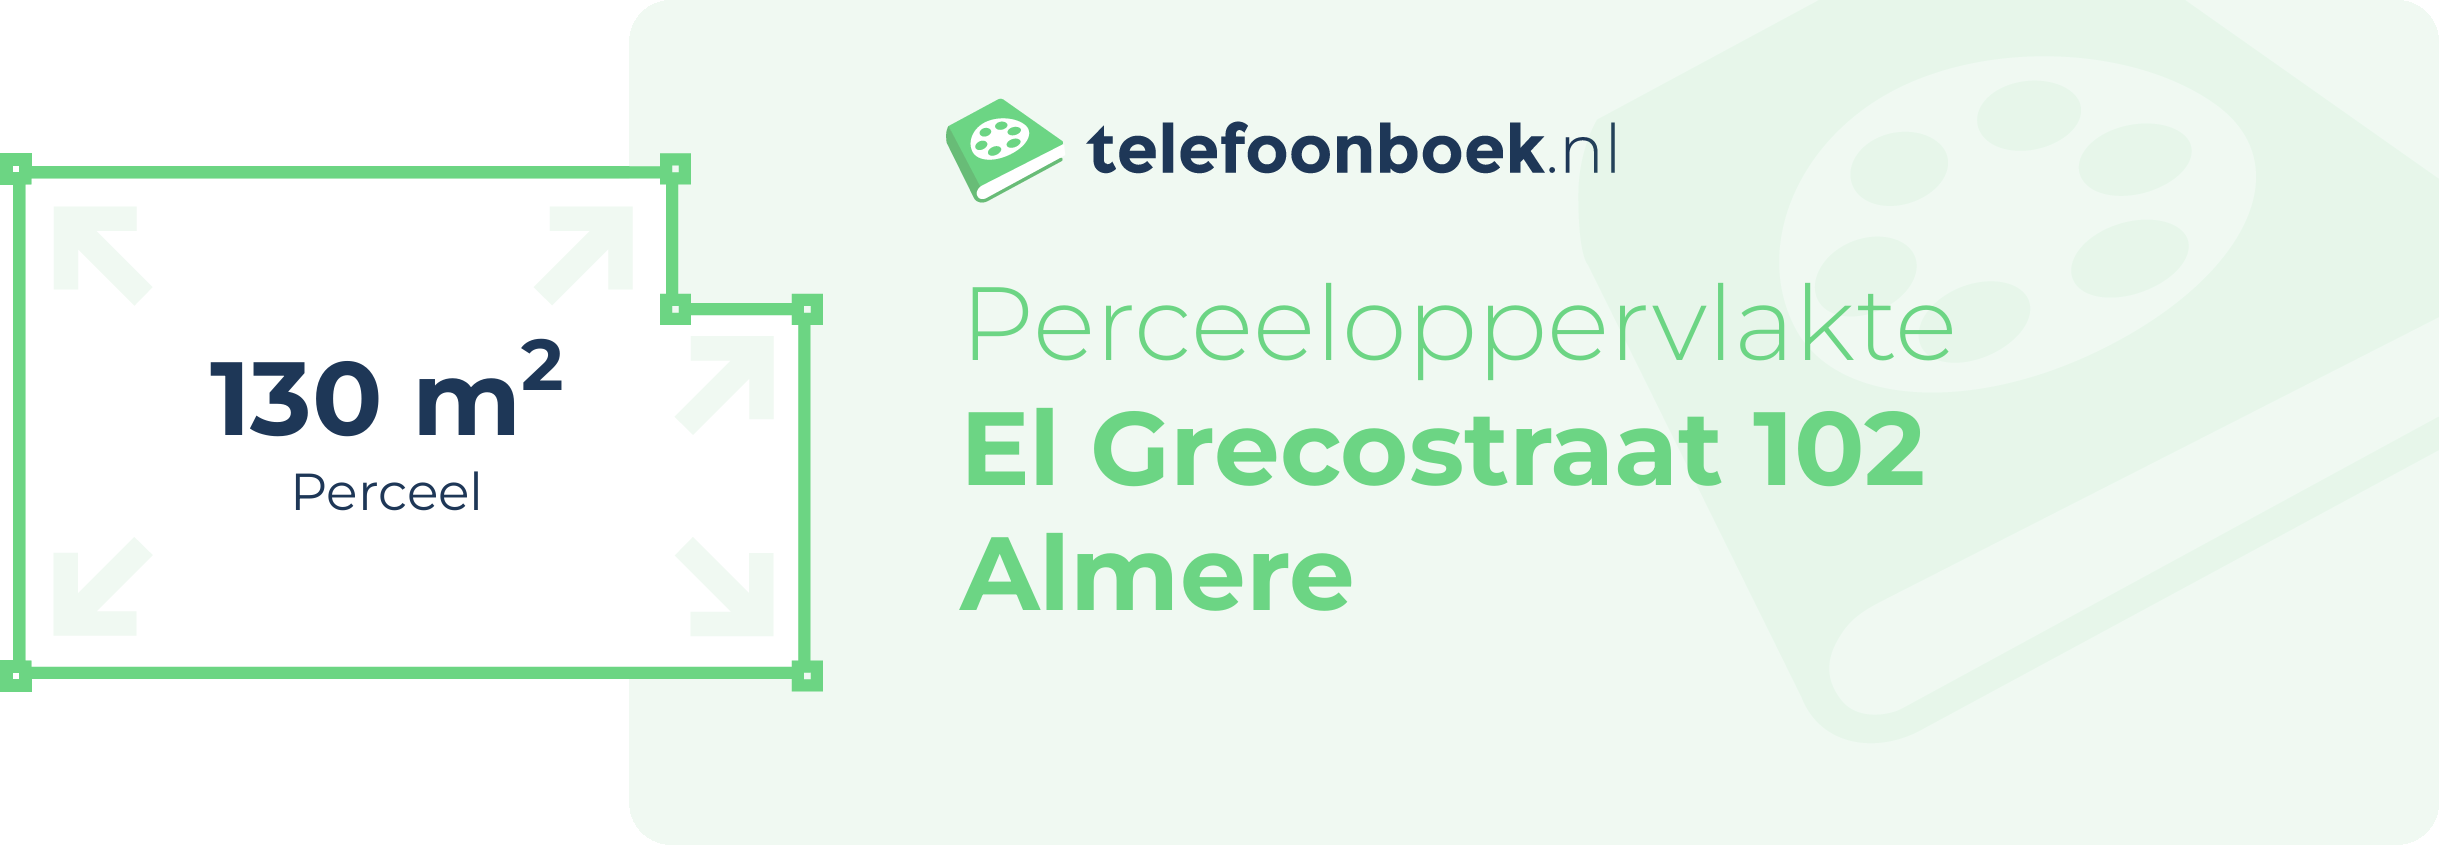 Perceeloppervlakte El Grecostraat 102 Almere